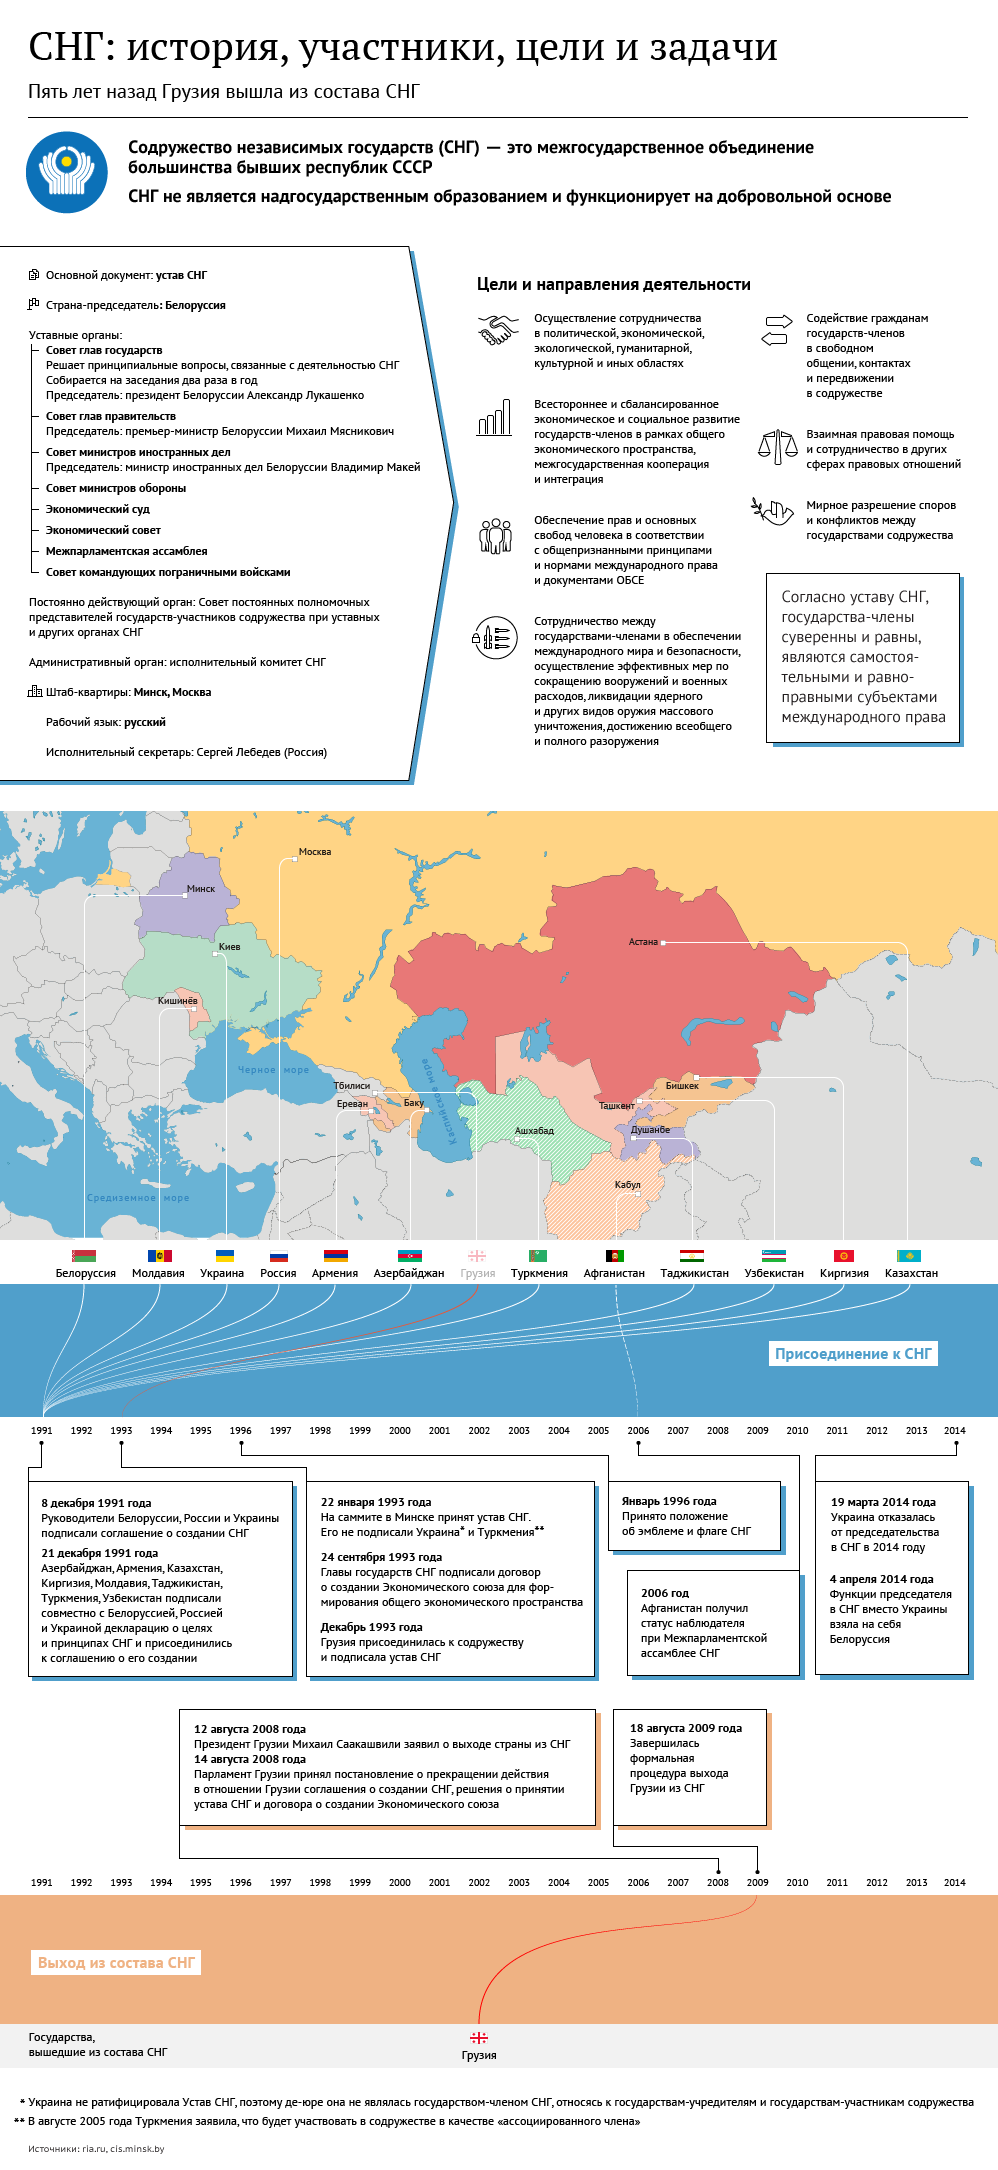 СНГ: история, участники, цели и задачи - Sputnik Молдова